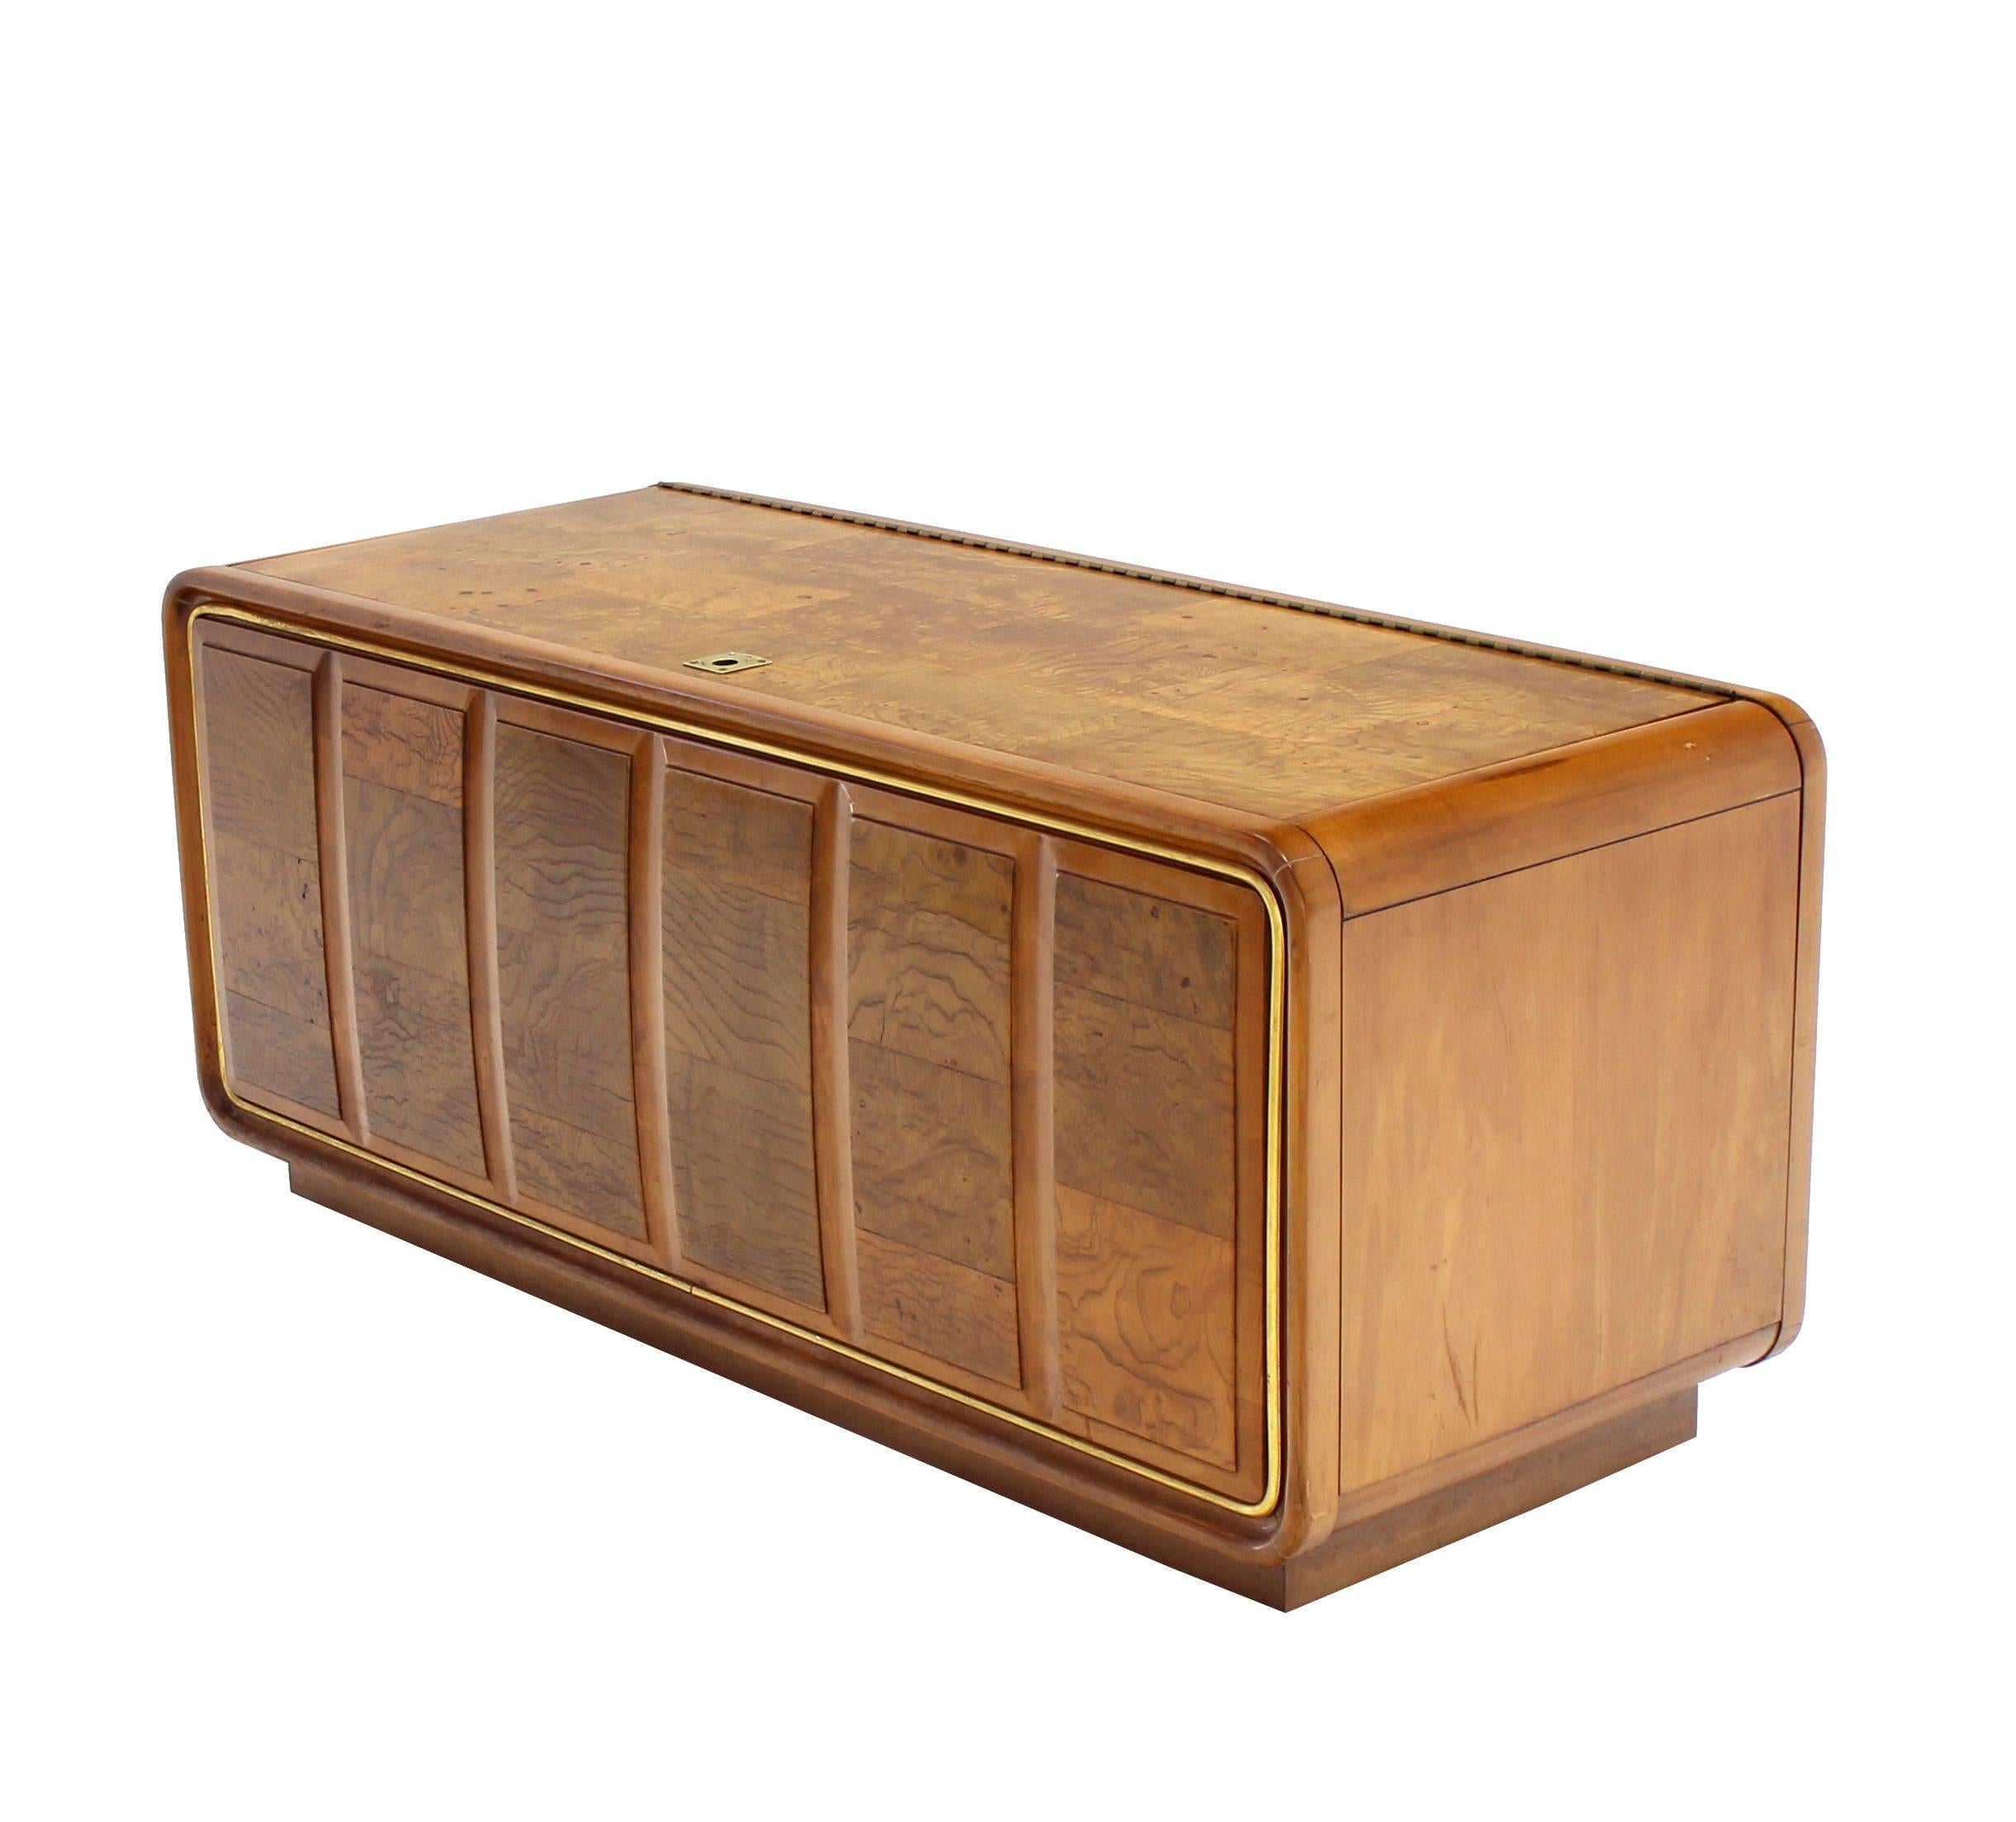 Very nice Art Deco style burl wood hope chest.